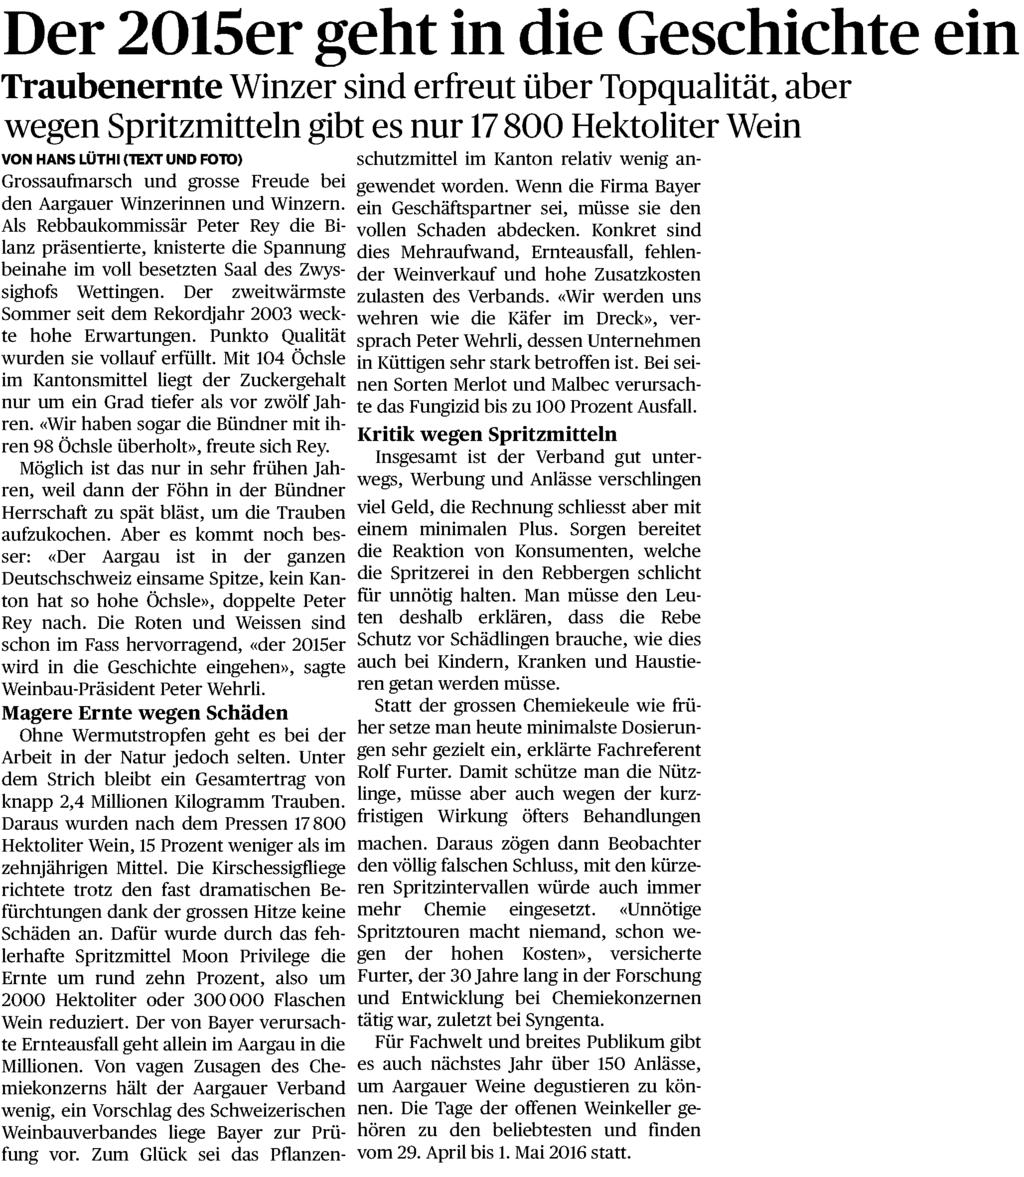 Aargauer Zeitung AG 5001 Aarau 058/ 200 58 58 www.aargauerzeitung.